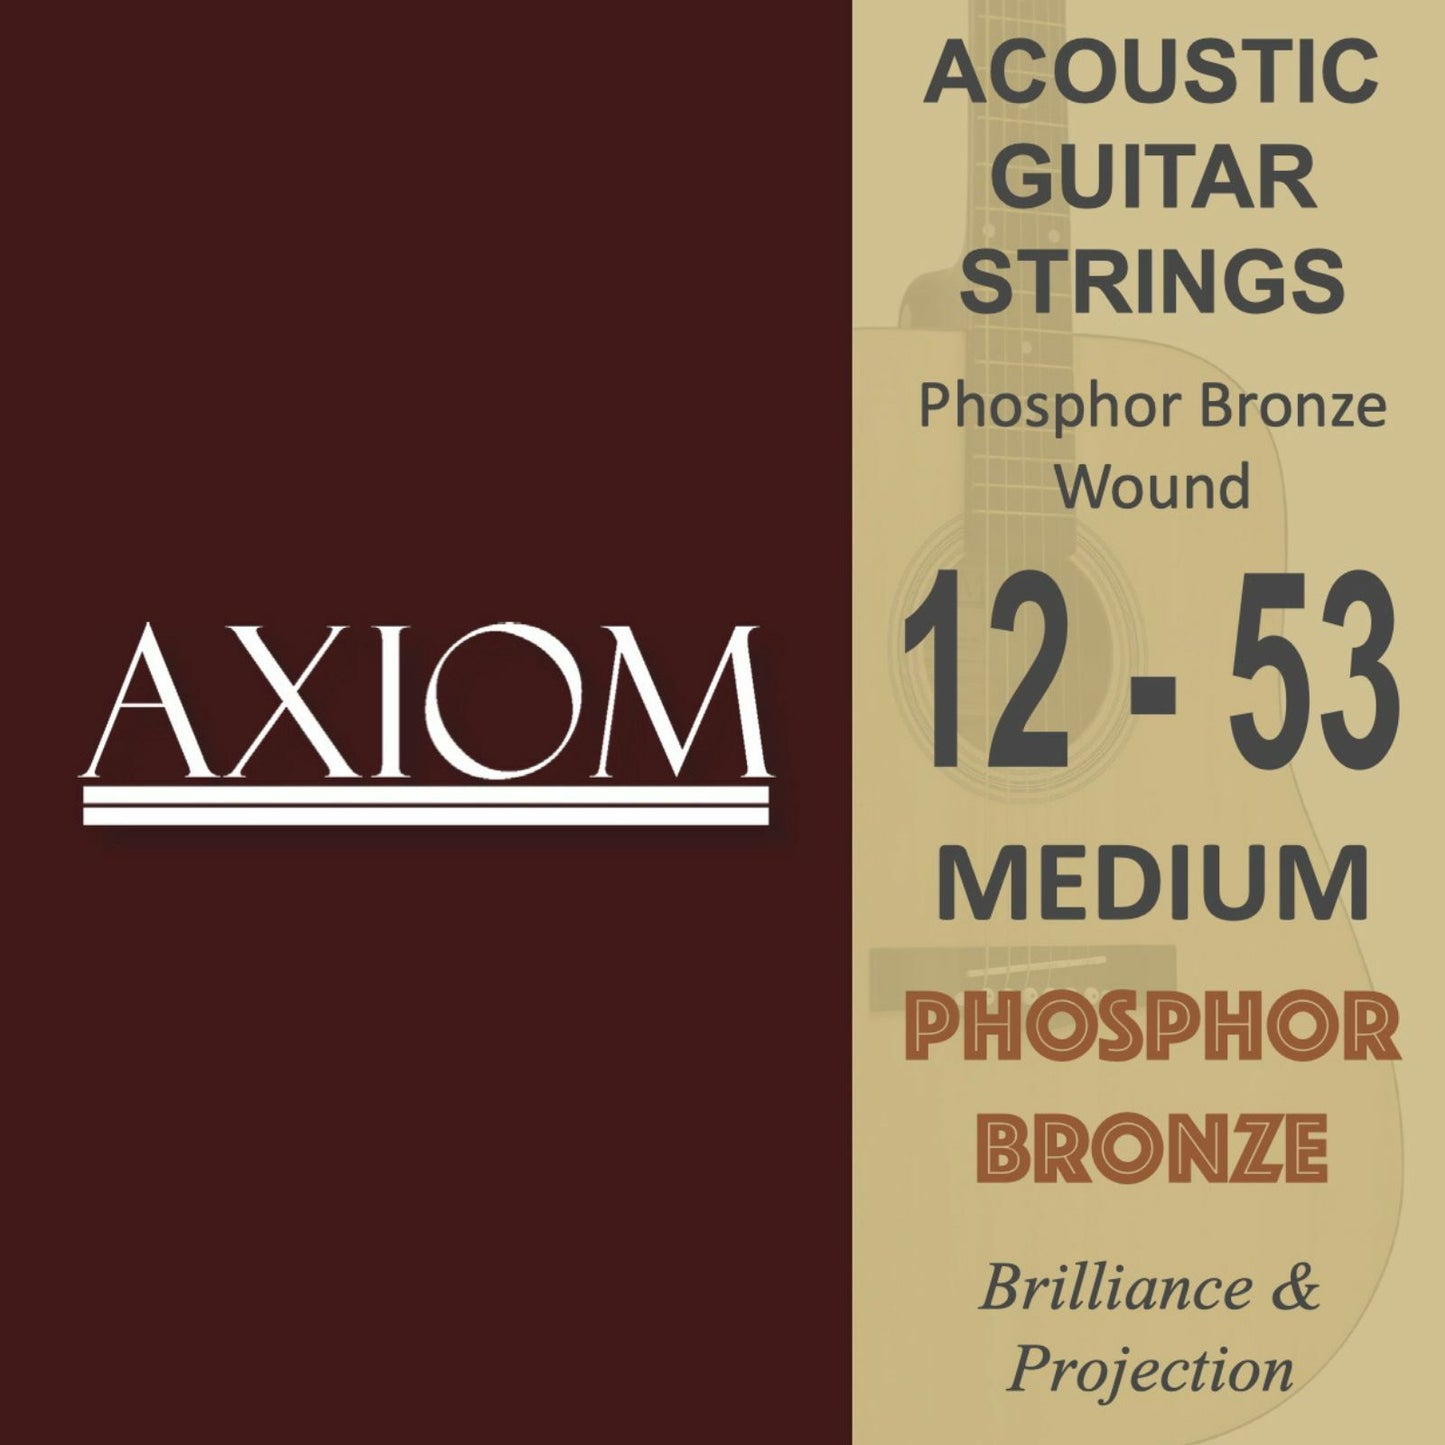 Axiom Phosphor Bronze Acoustic Guitar Strings - Medium